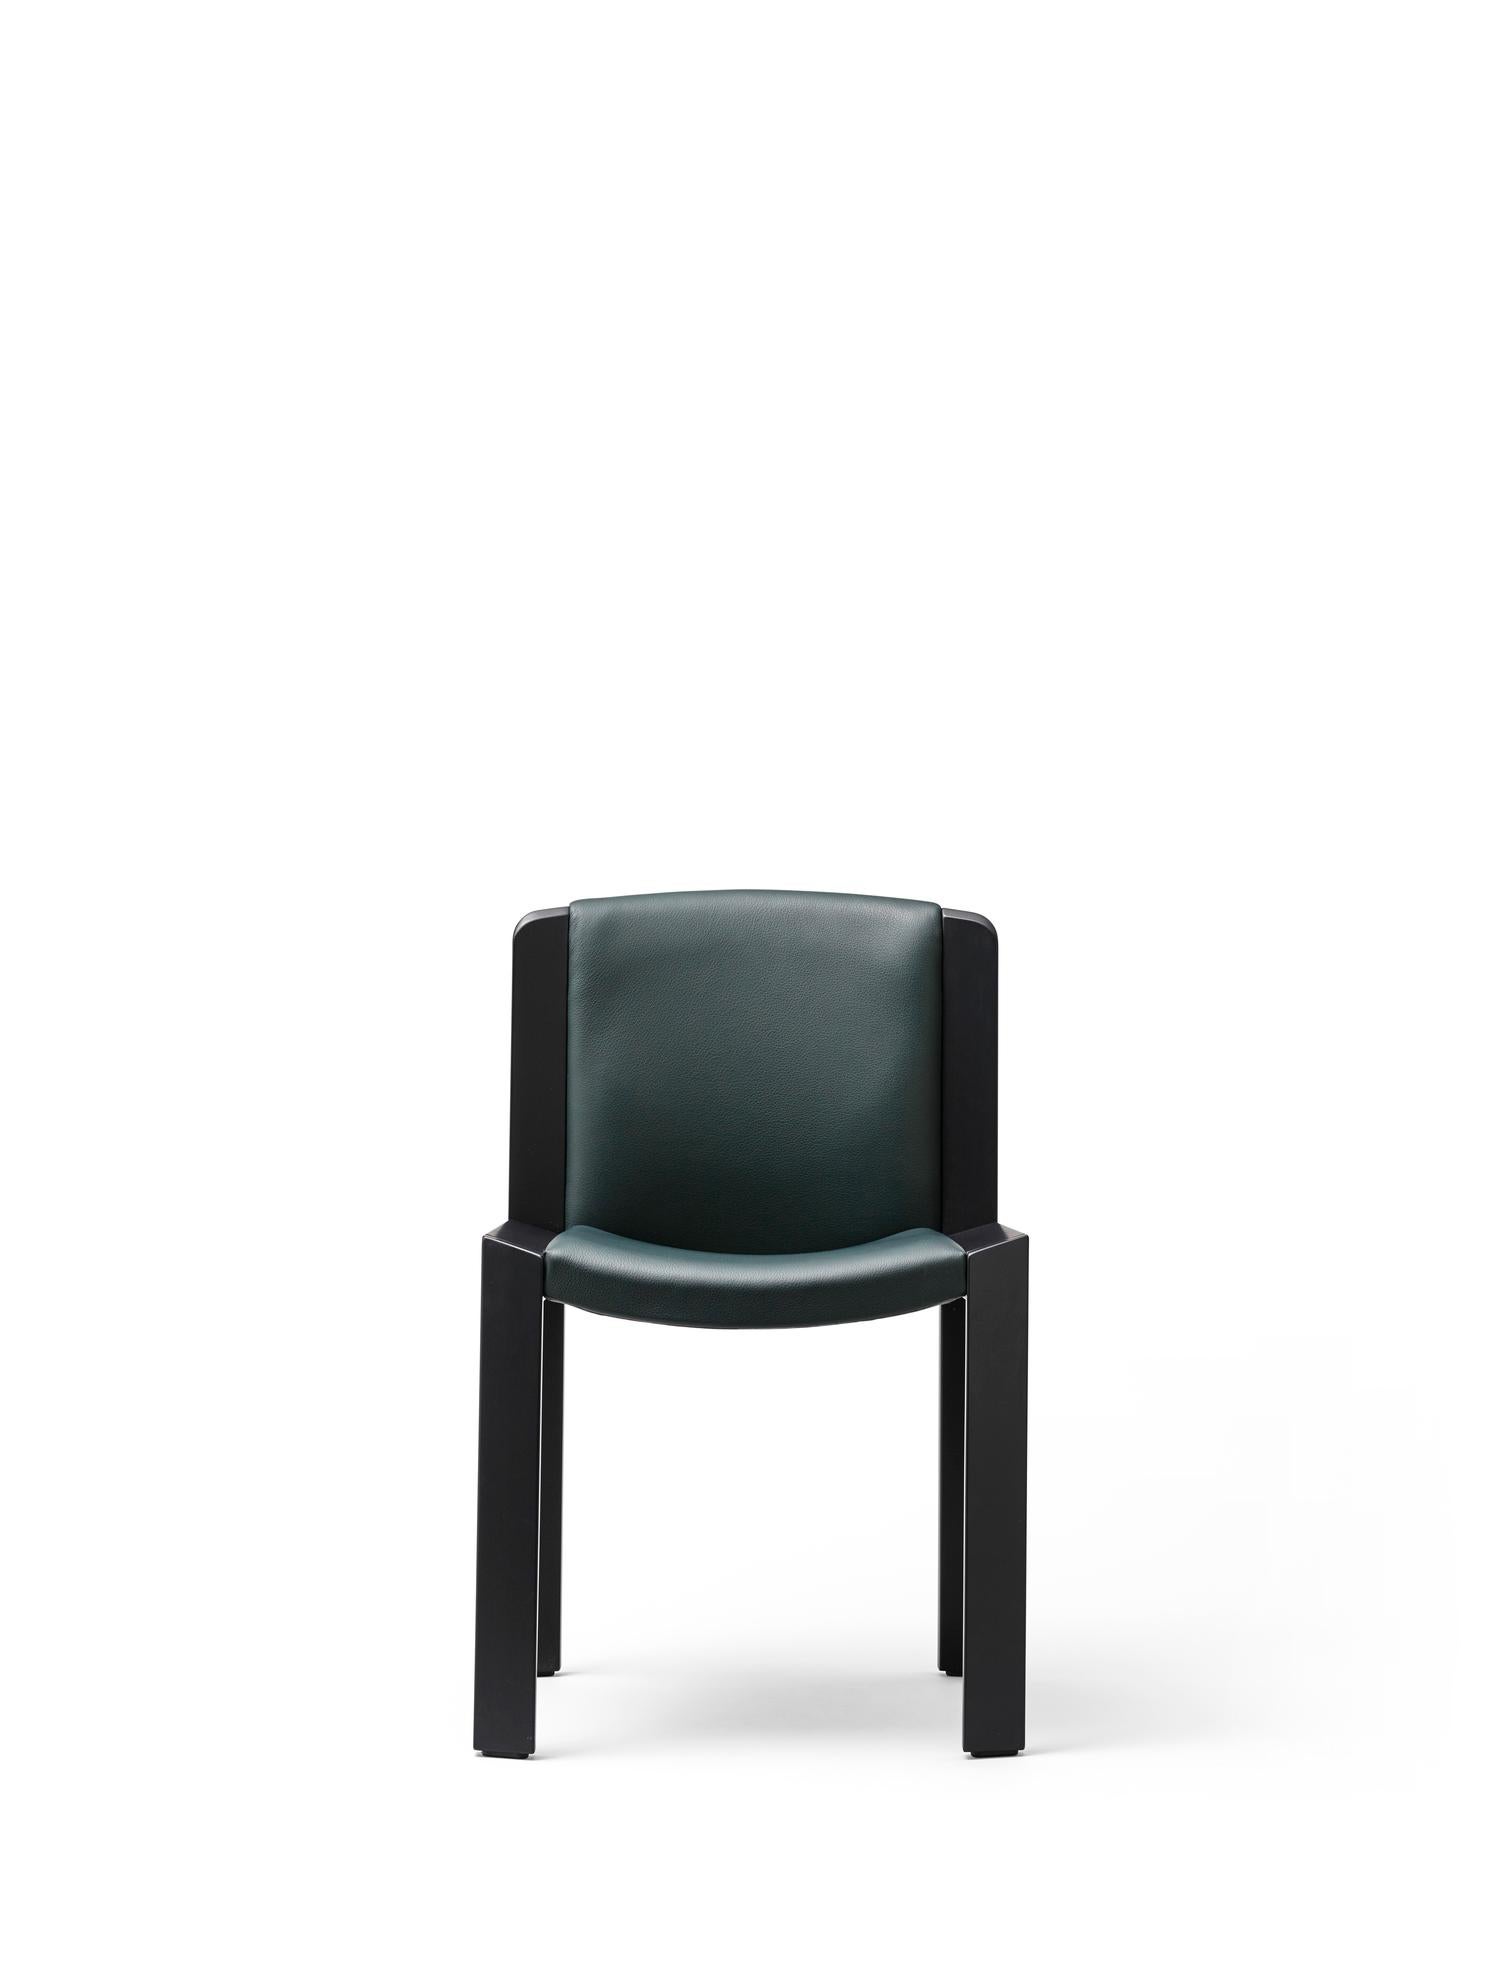 Danish Set of Six Joe Colombo 'Chair 300' Wood and Sørensen Leather by Karakter For Sale